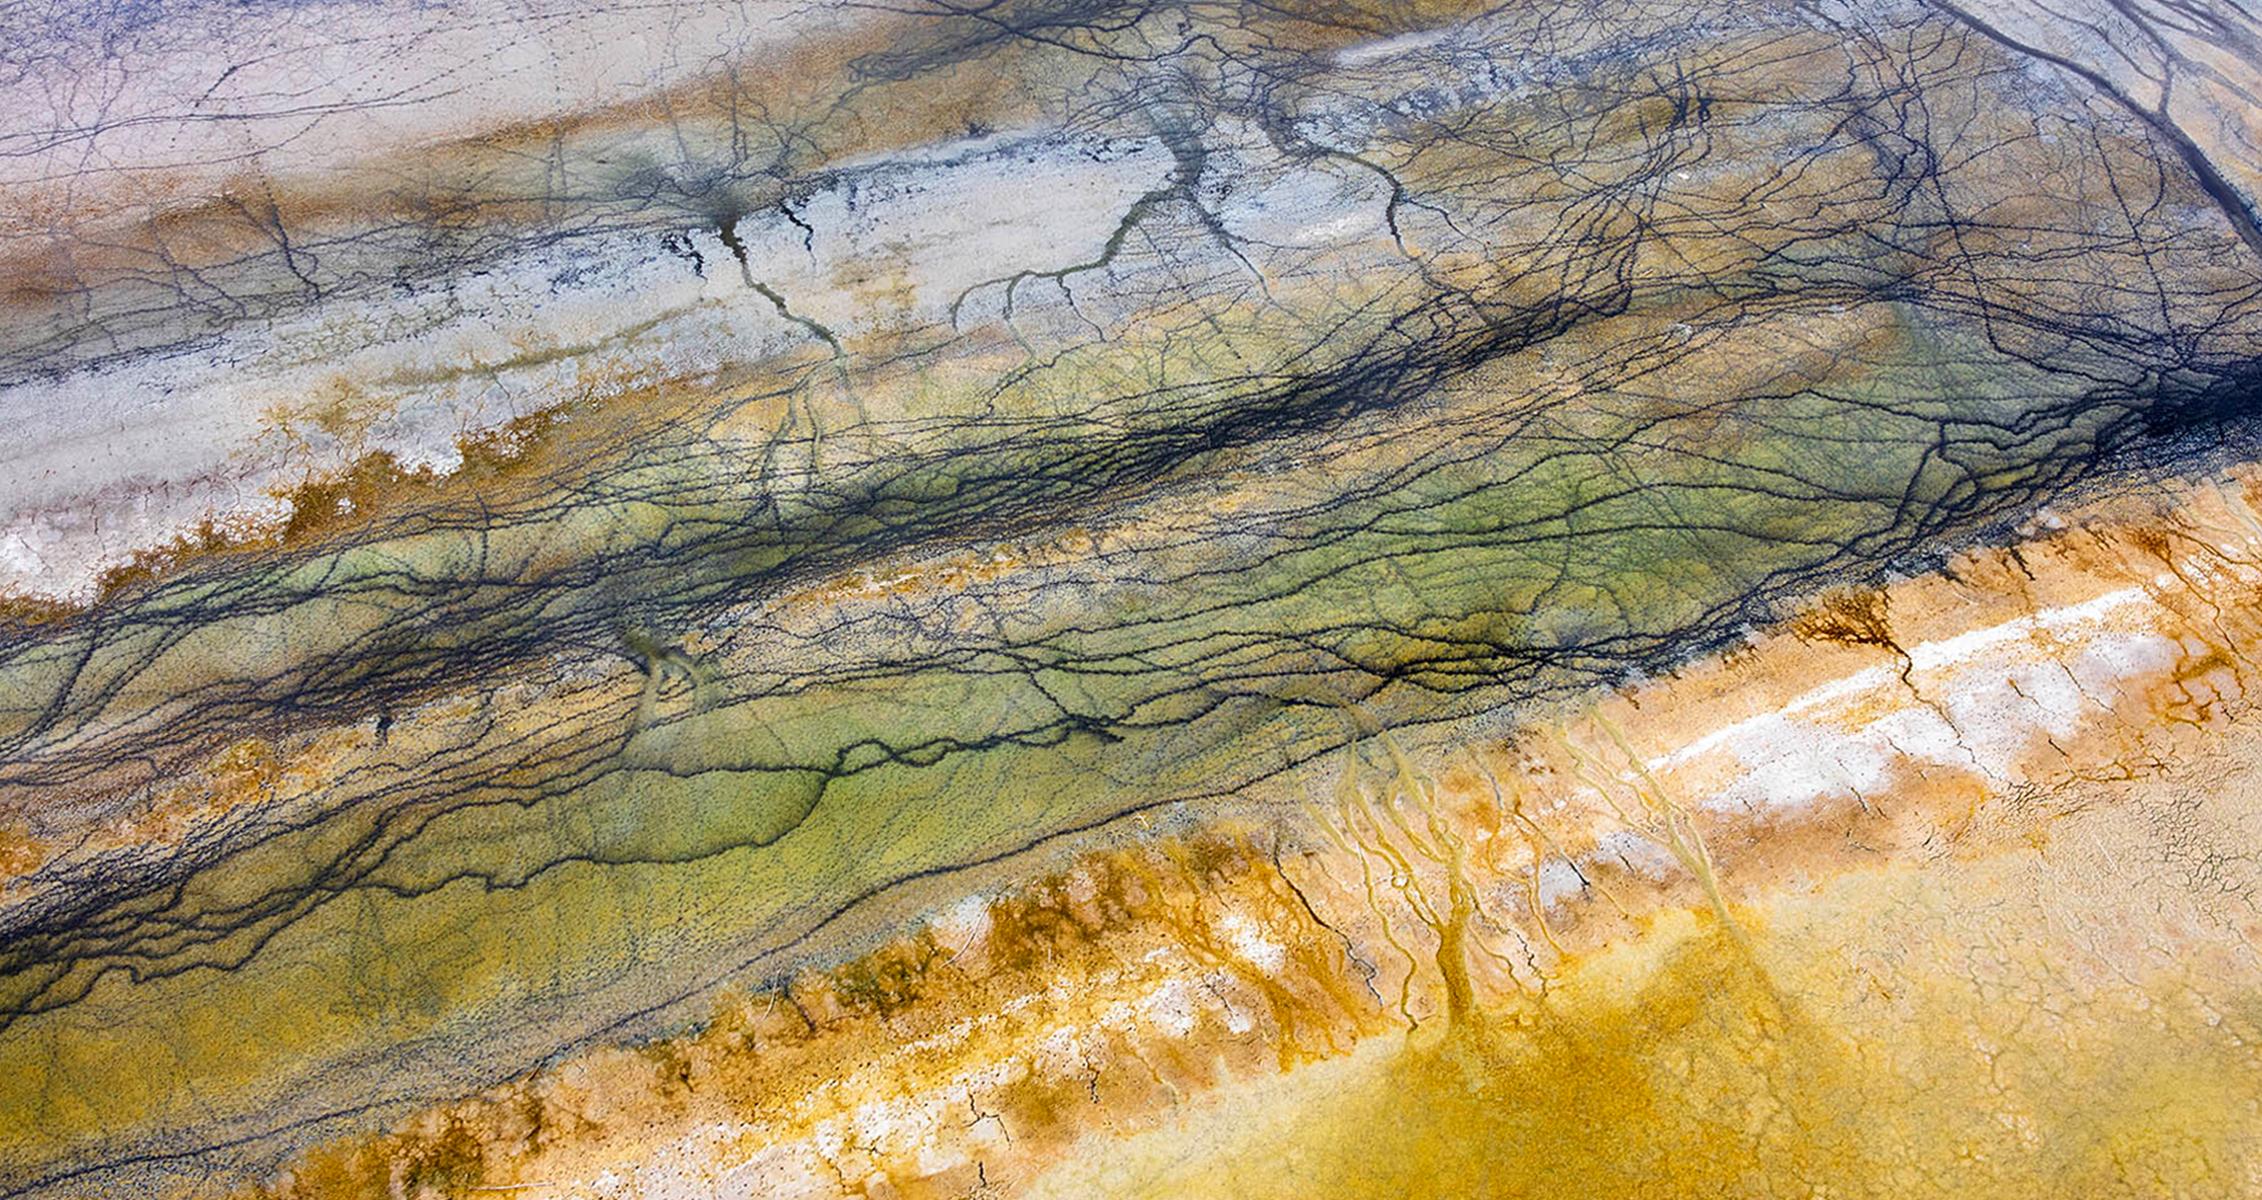 Jill Peters Landscape Photograph – Unbetitelt 2164. Landschaftsfotografie in limitierter Auflage in Farbe